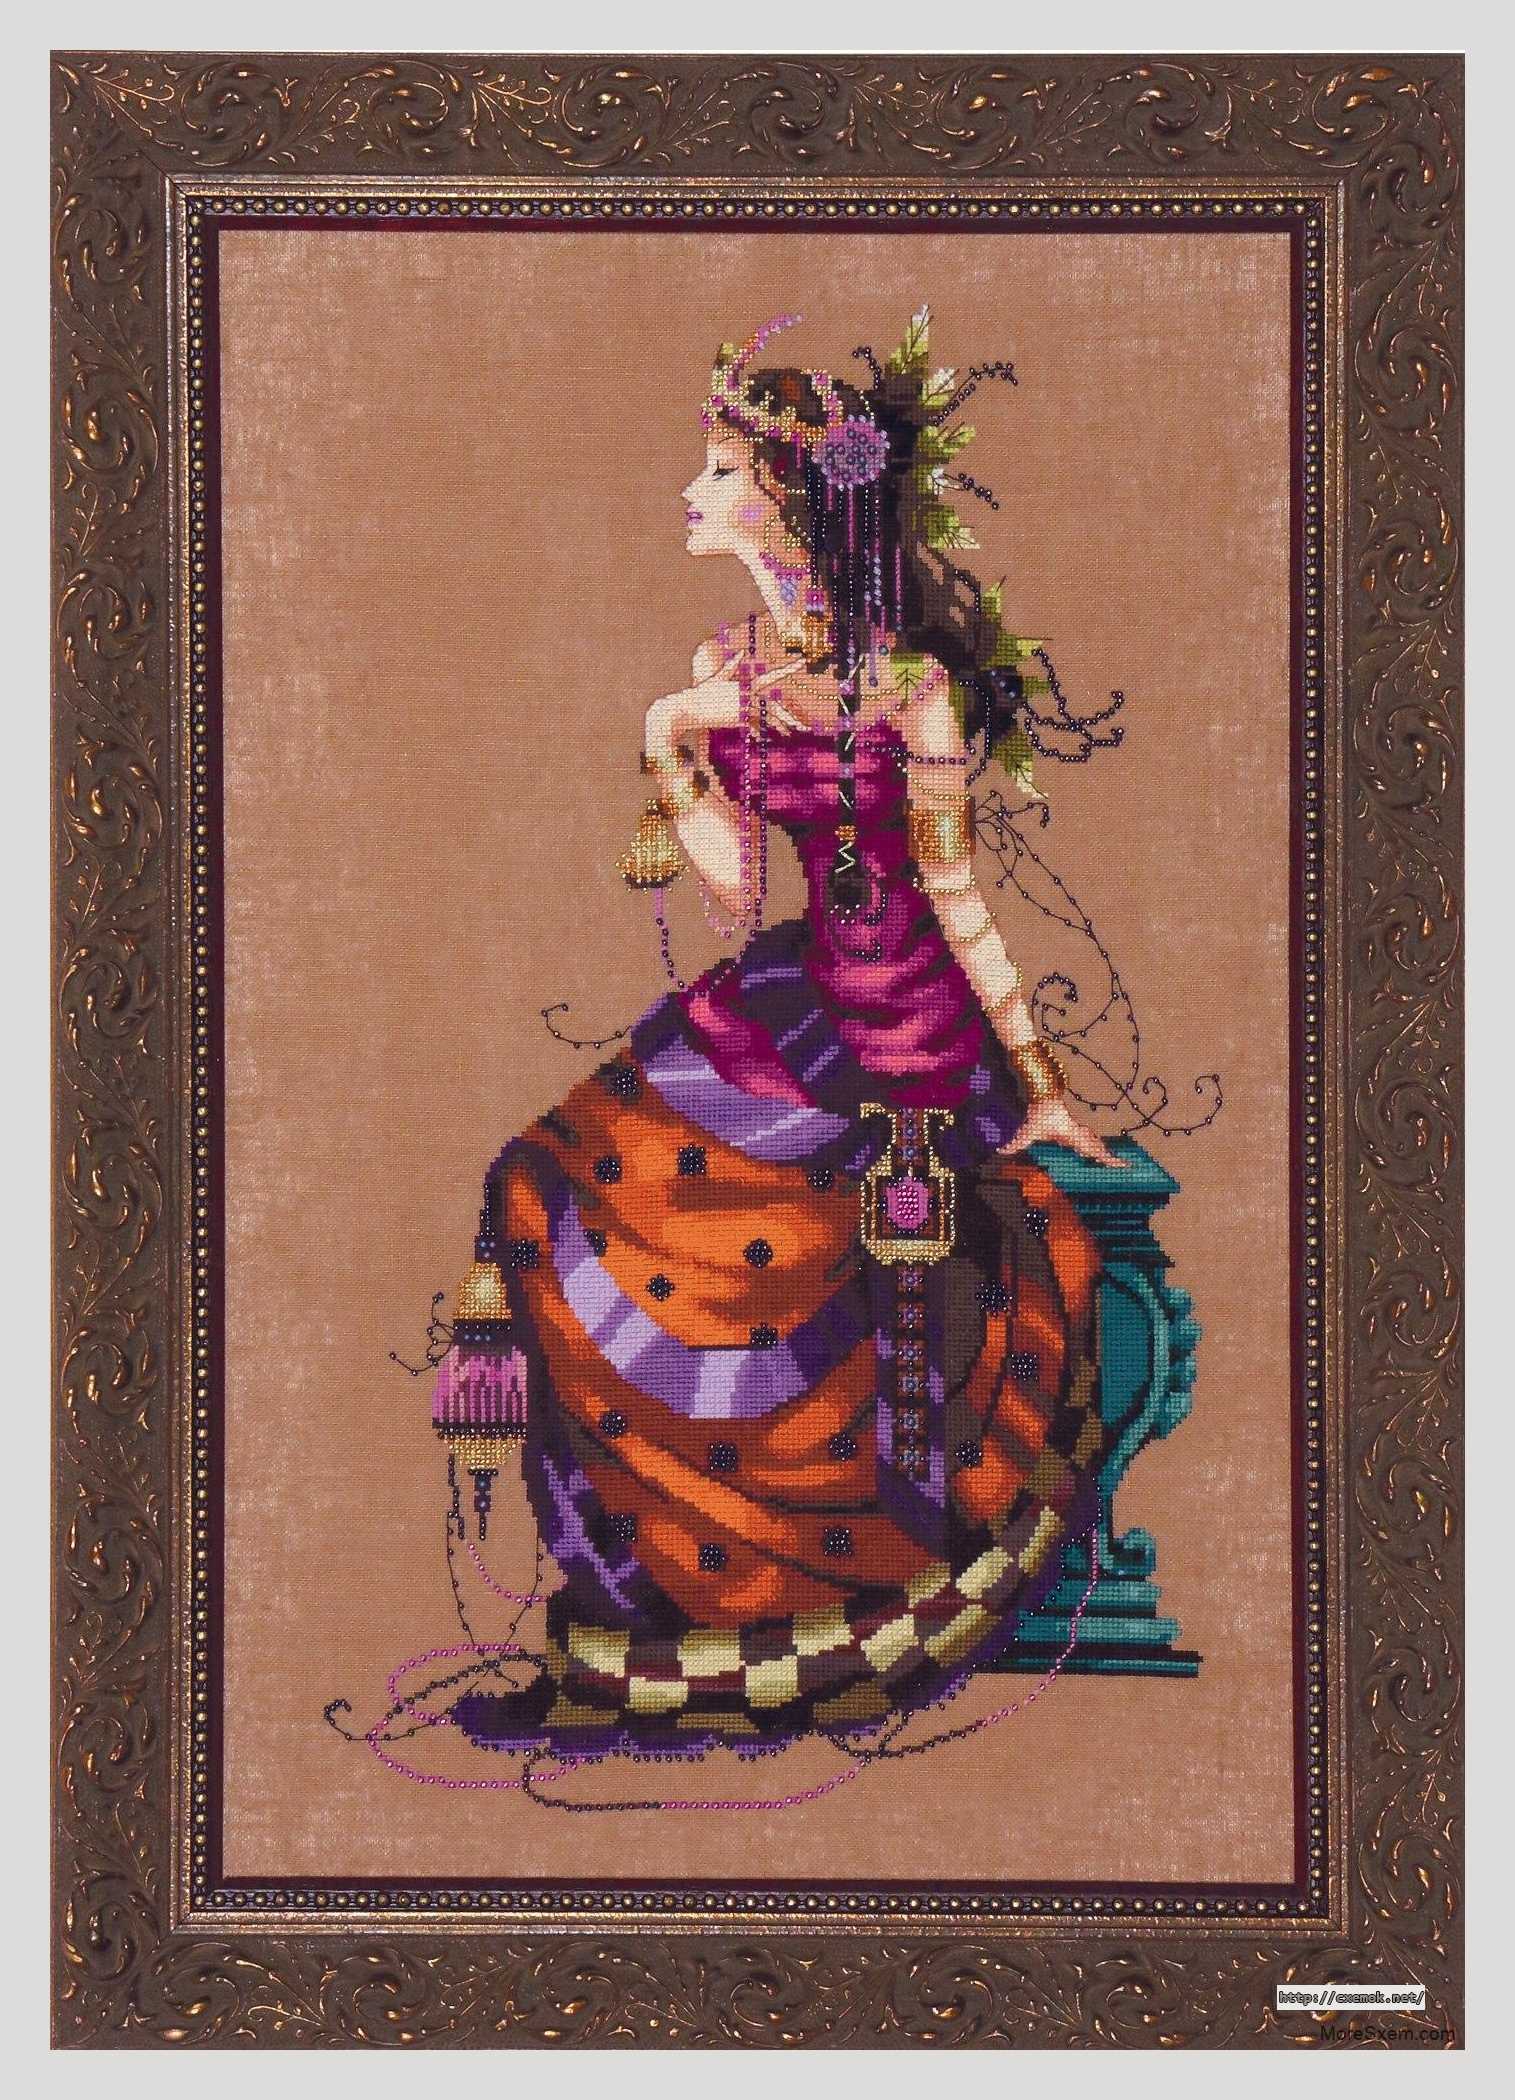 Download embroidery patterns by cross-stitch  - Королева цыган